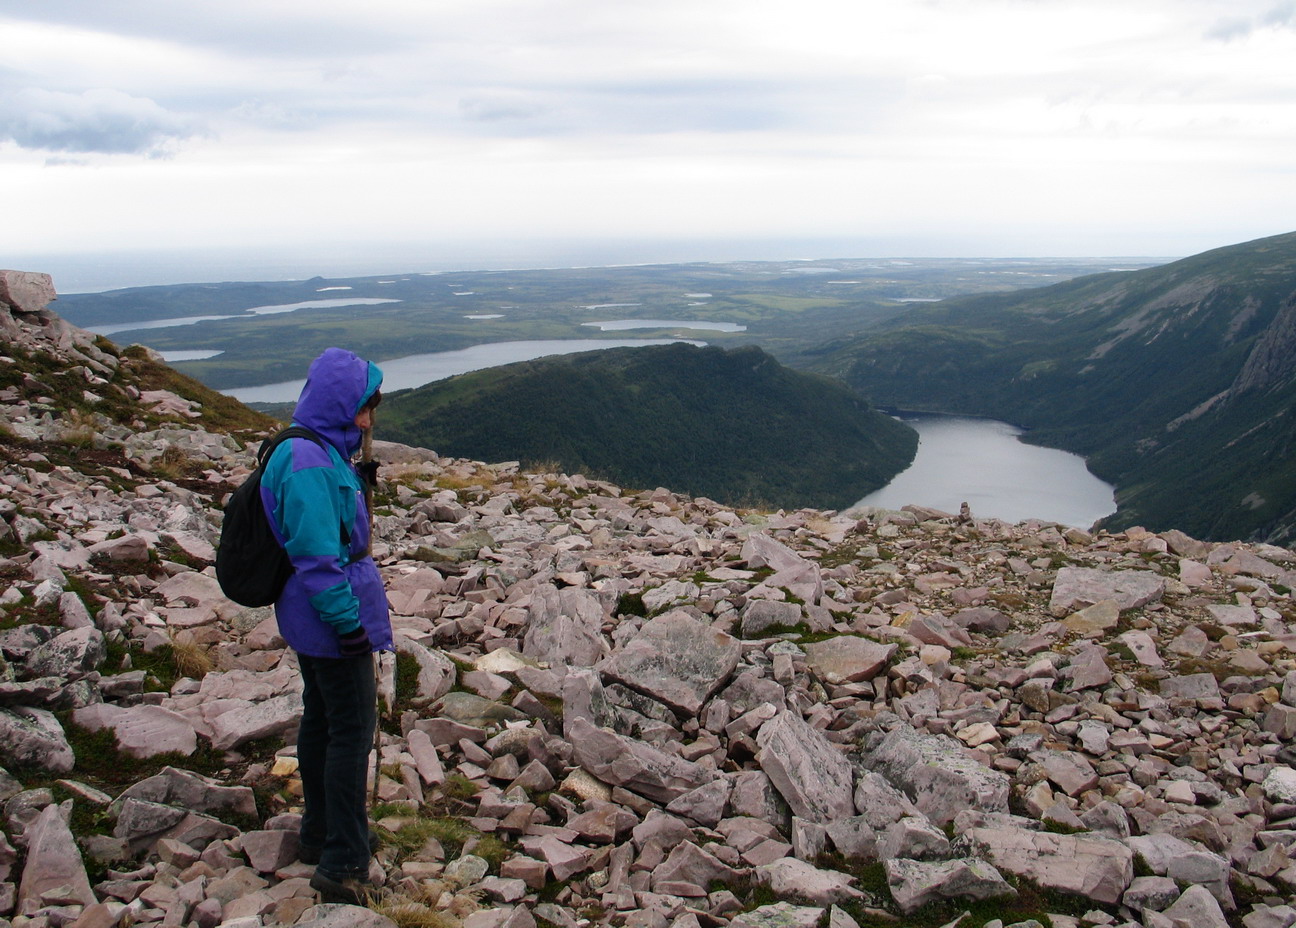 Miriam on Gros Morne summit. Photo by Ulli